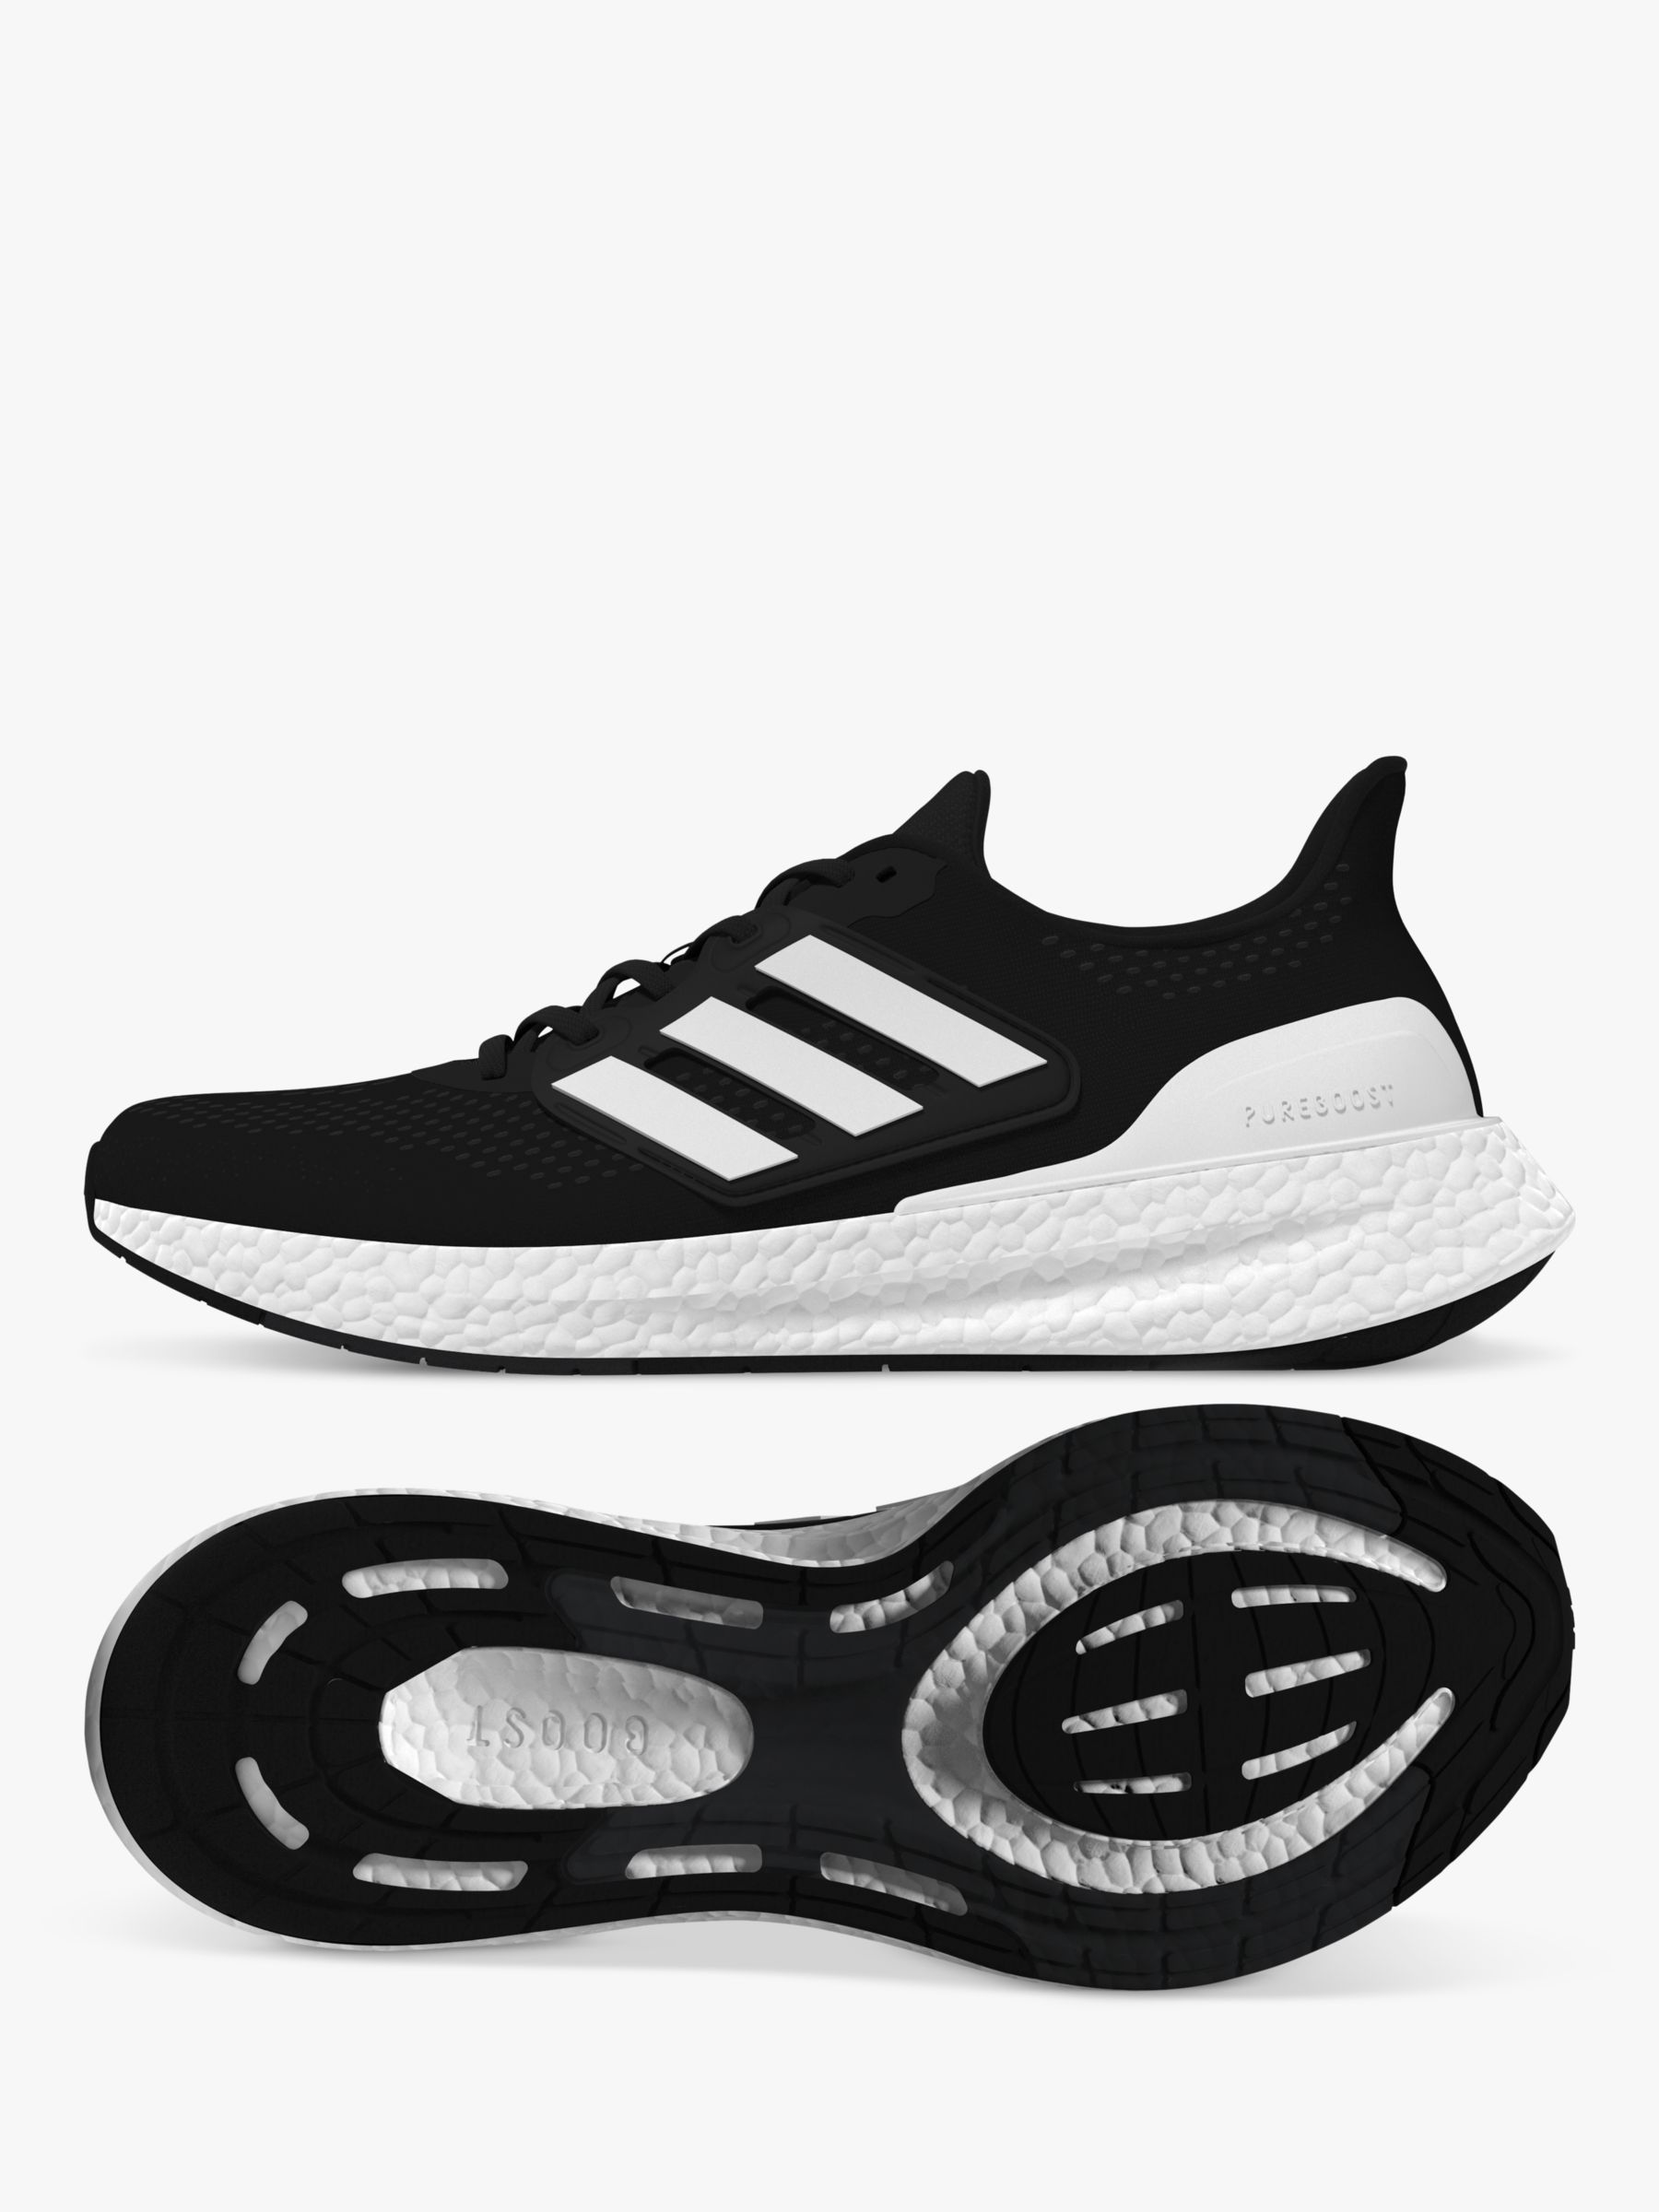 adidas Pureboost 23 Men's Running Shoes, Black/White/Carbon, 7